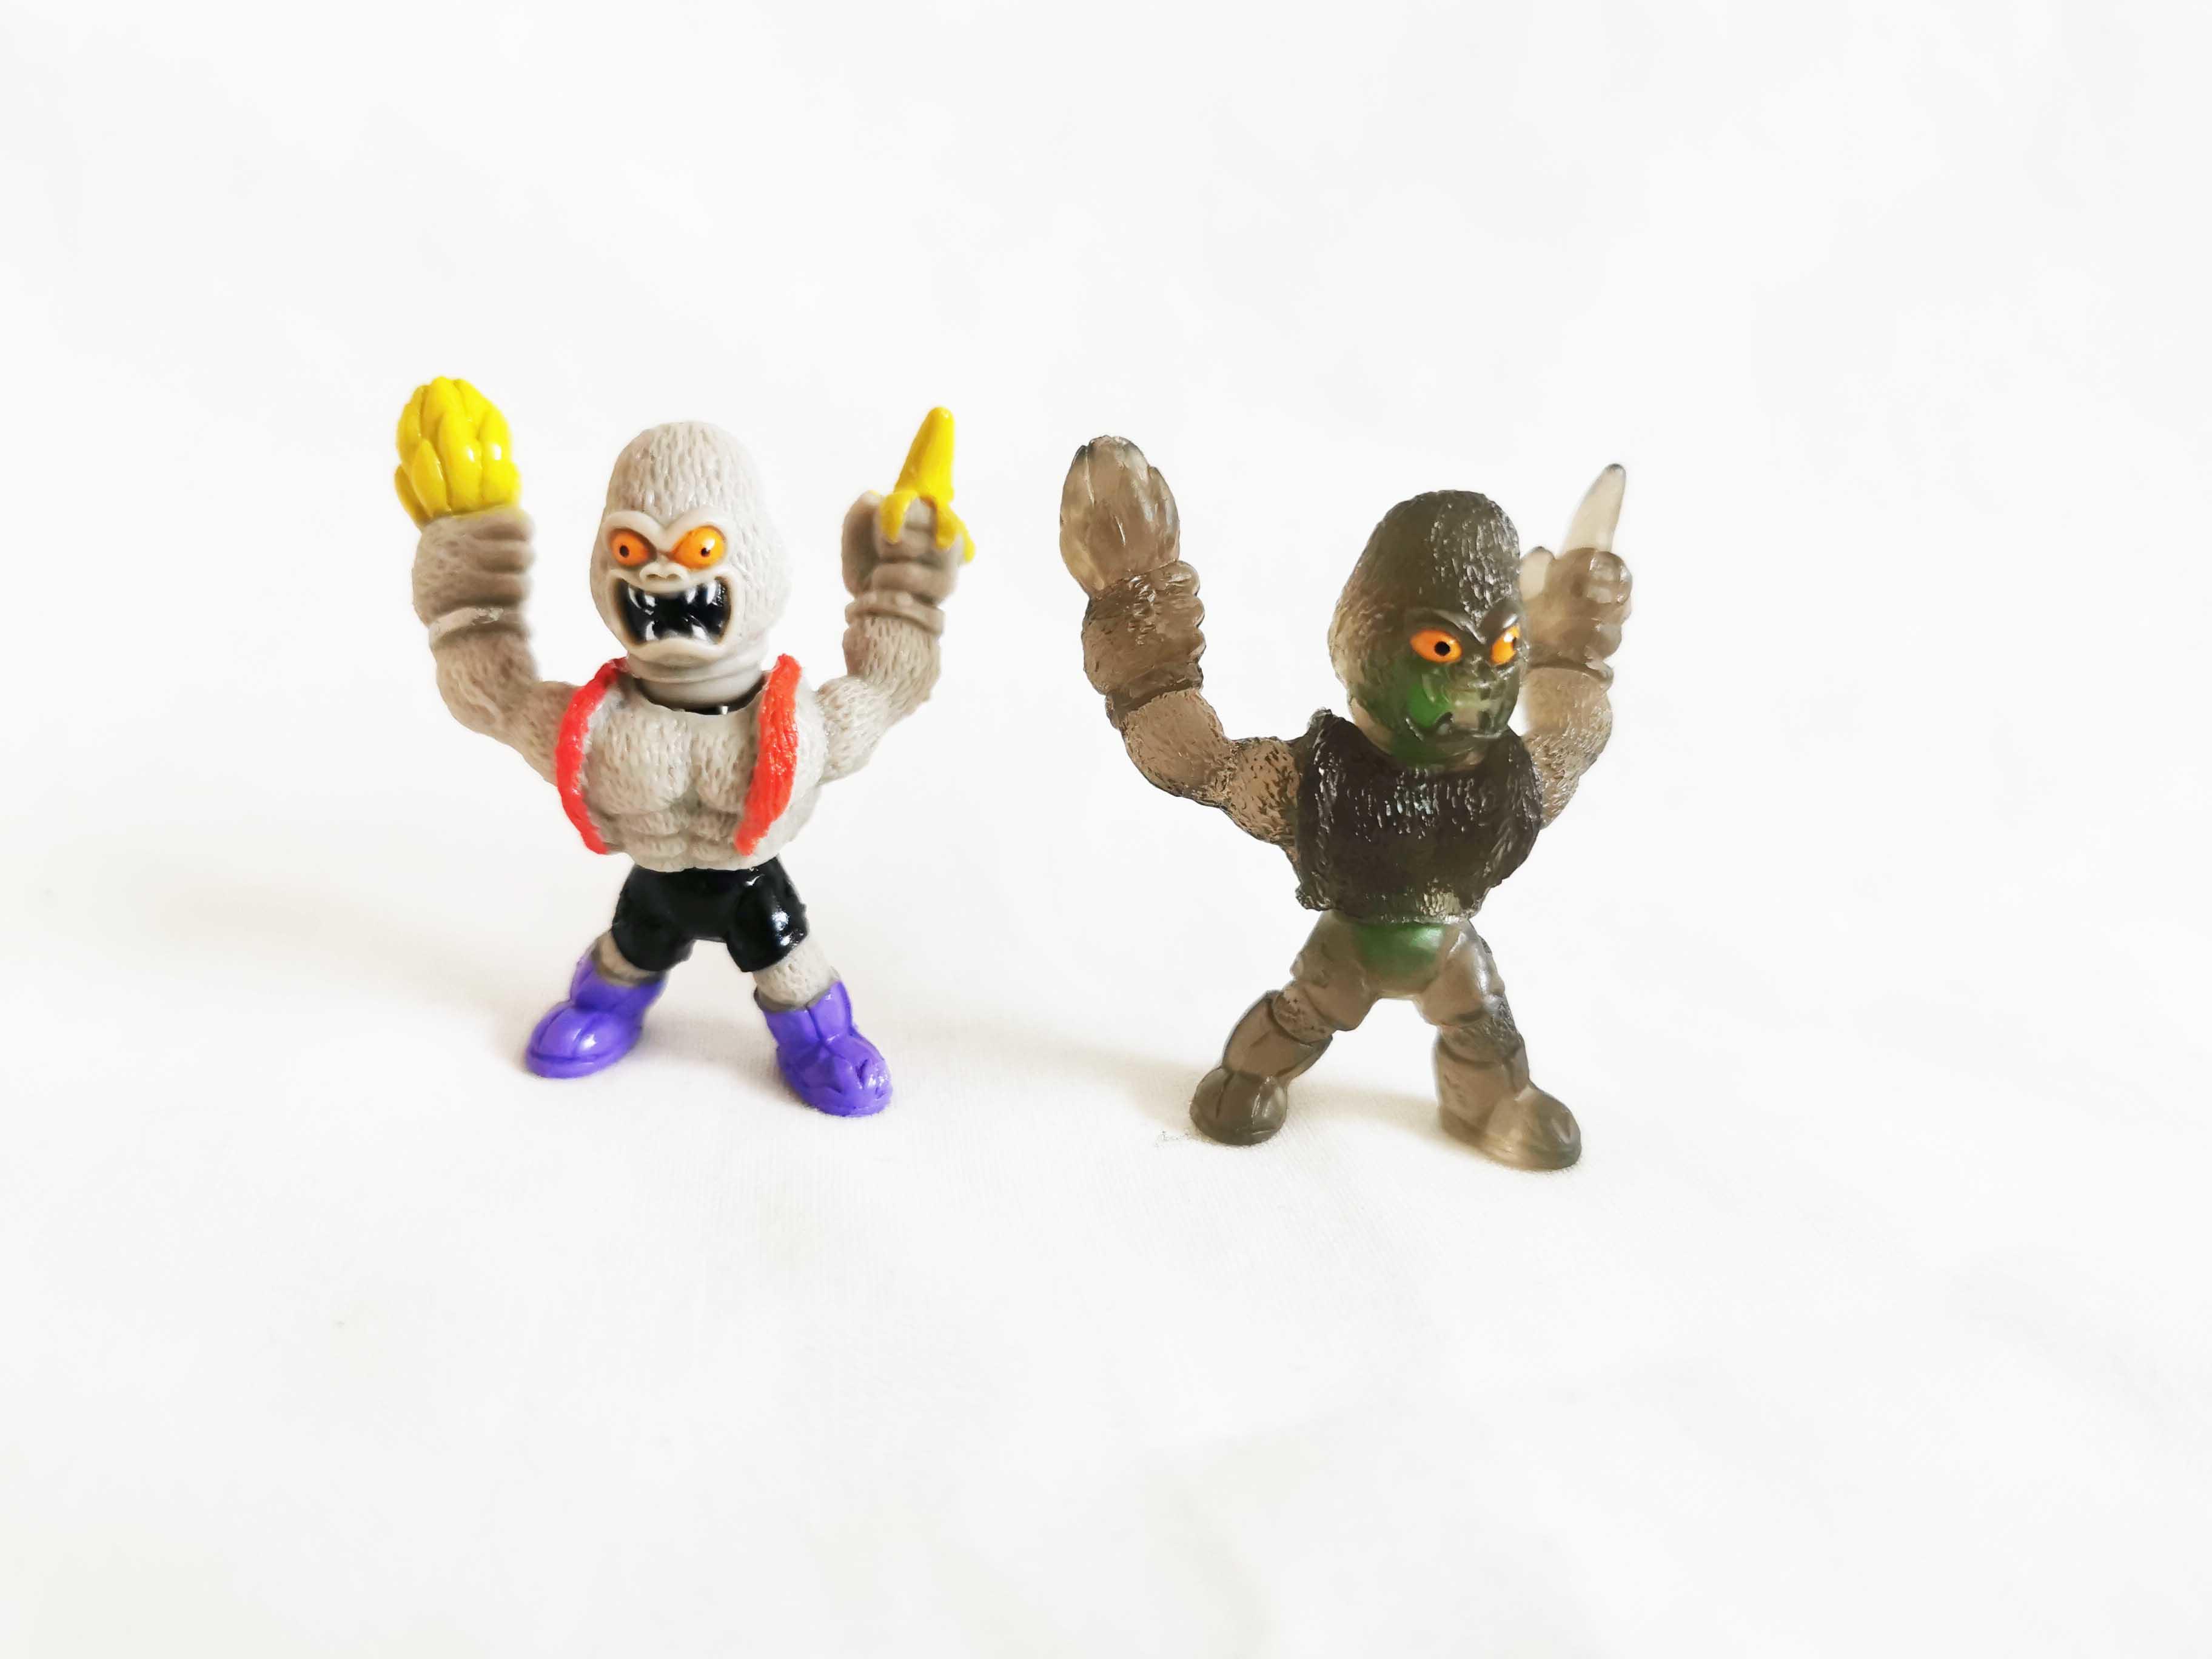 Mutant Mania Thriller Gorilla Figures Both versions Ultra Rare #059 Moose Toys